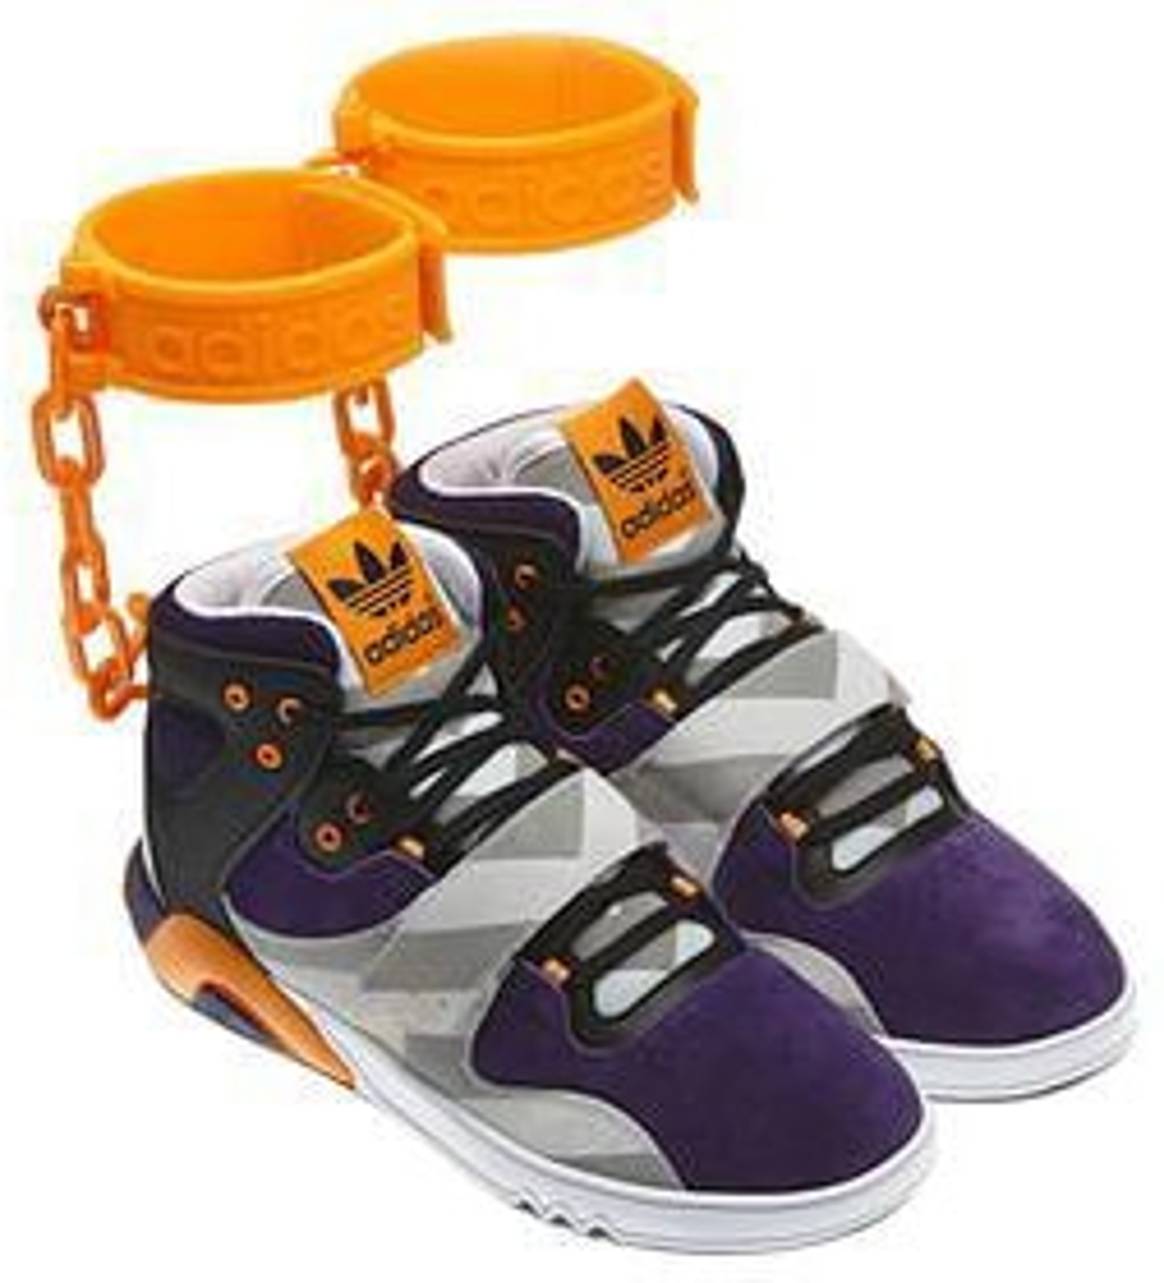 Adidas: Ärger wegen "Sklaven"-Sneakers